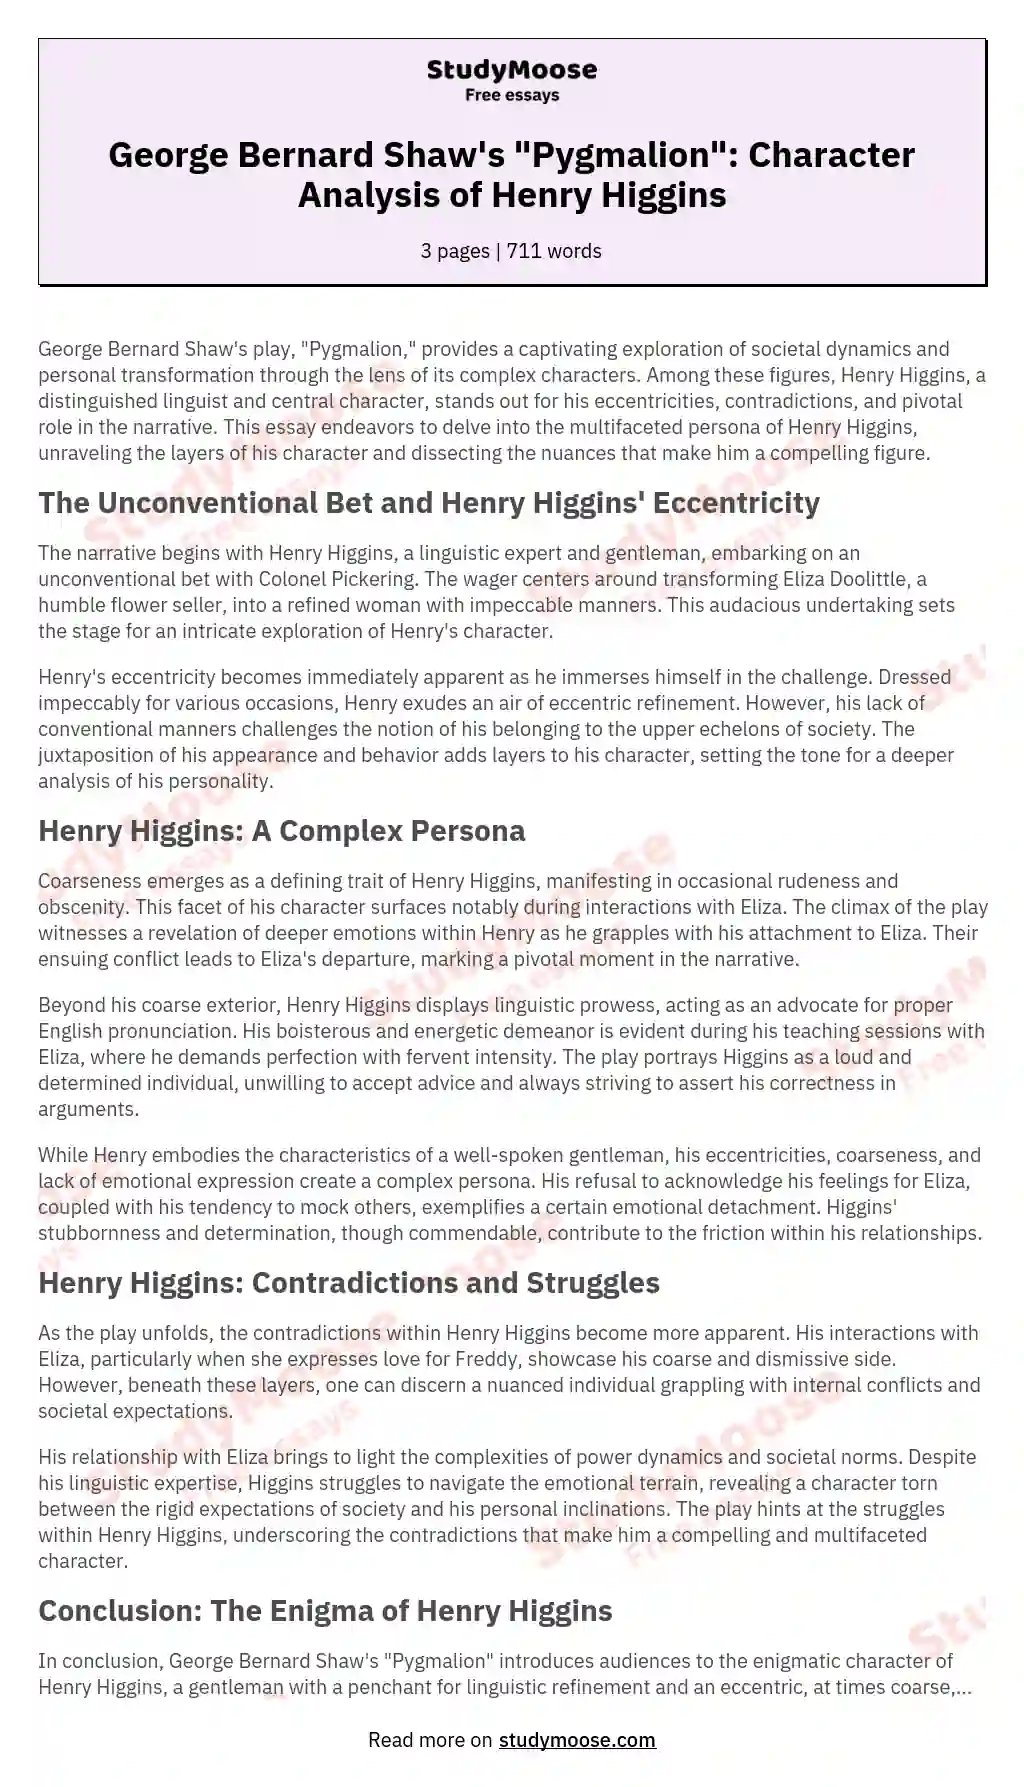 George Bernard Shaw's "Pygmalion": Character Analysis of Henry Higgins essay